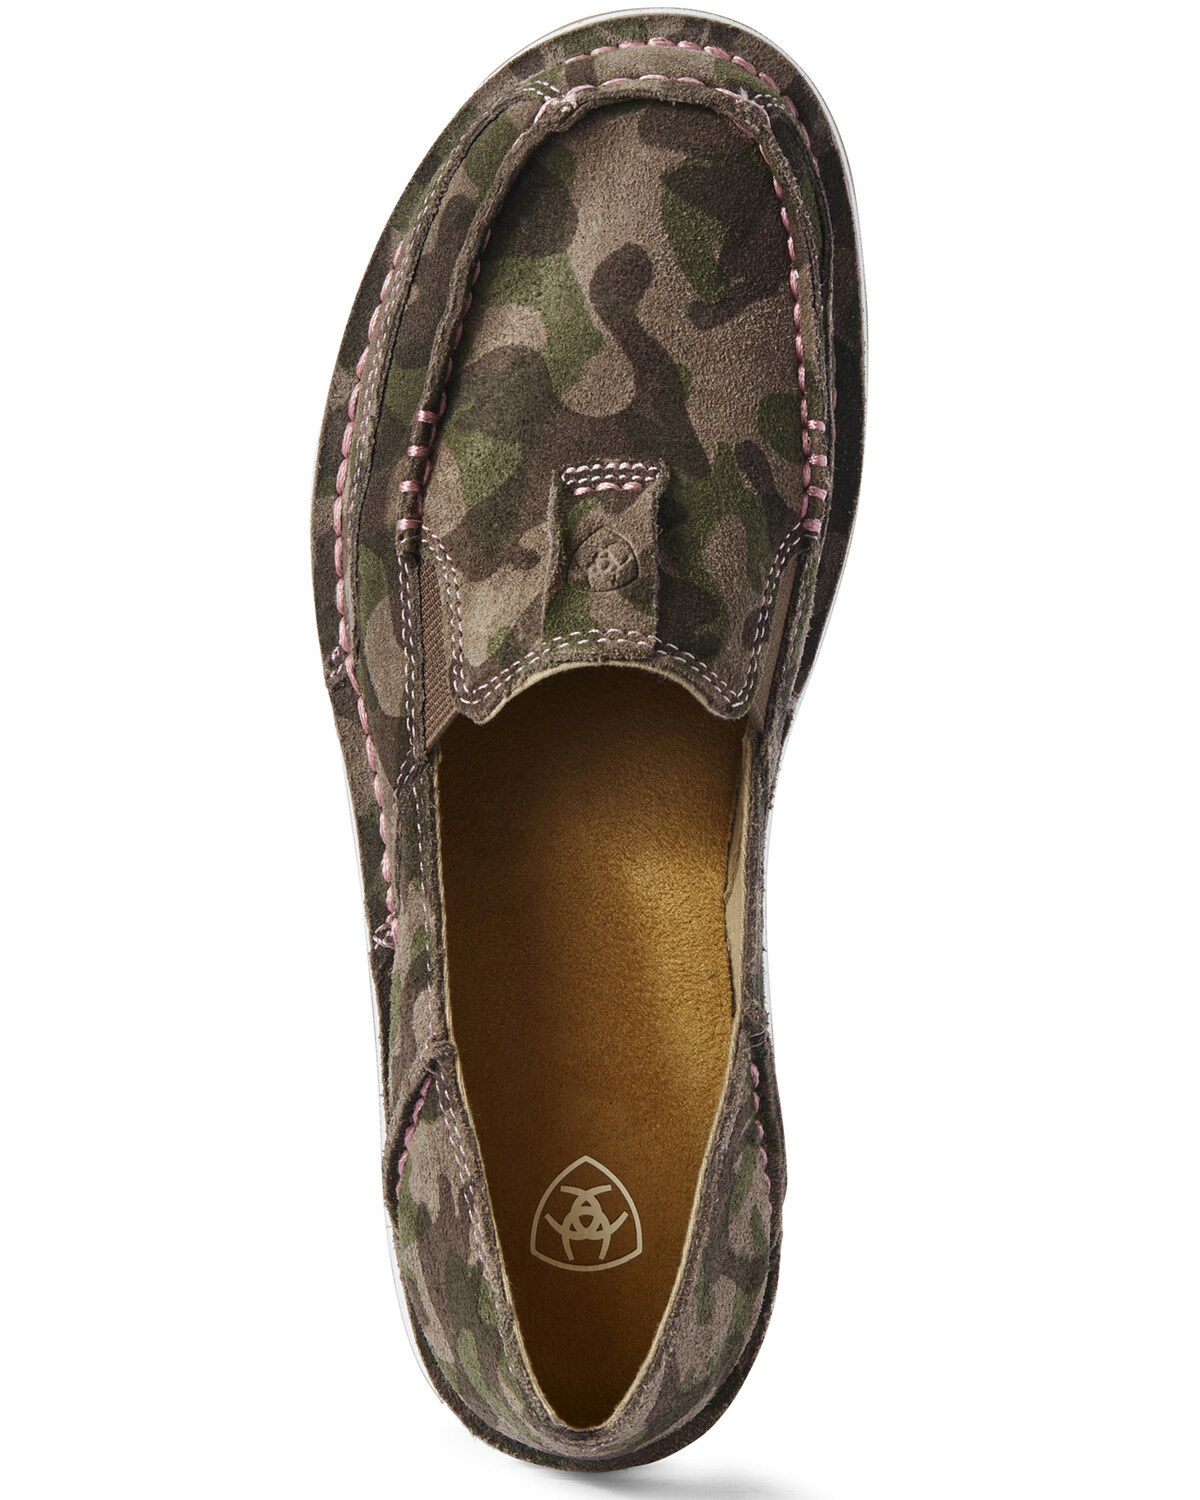 Camo Cruiser Shoes - Moc Toe | Boot Barn